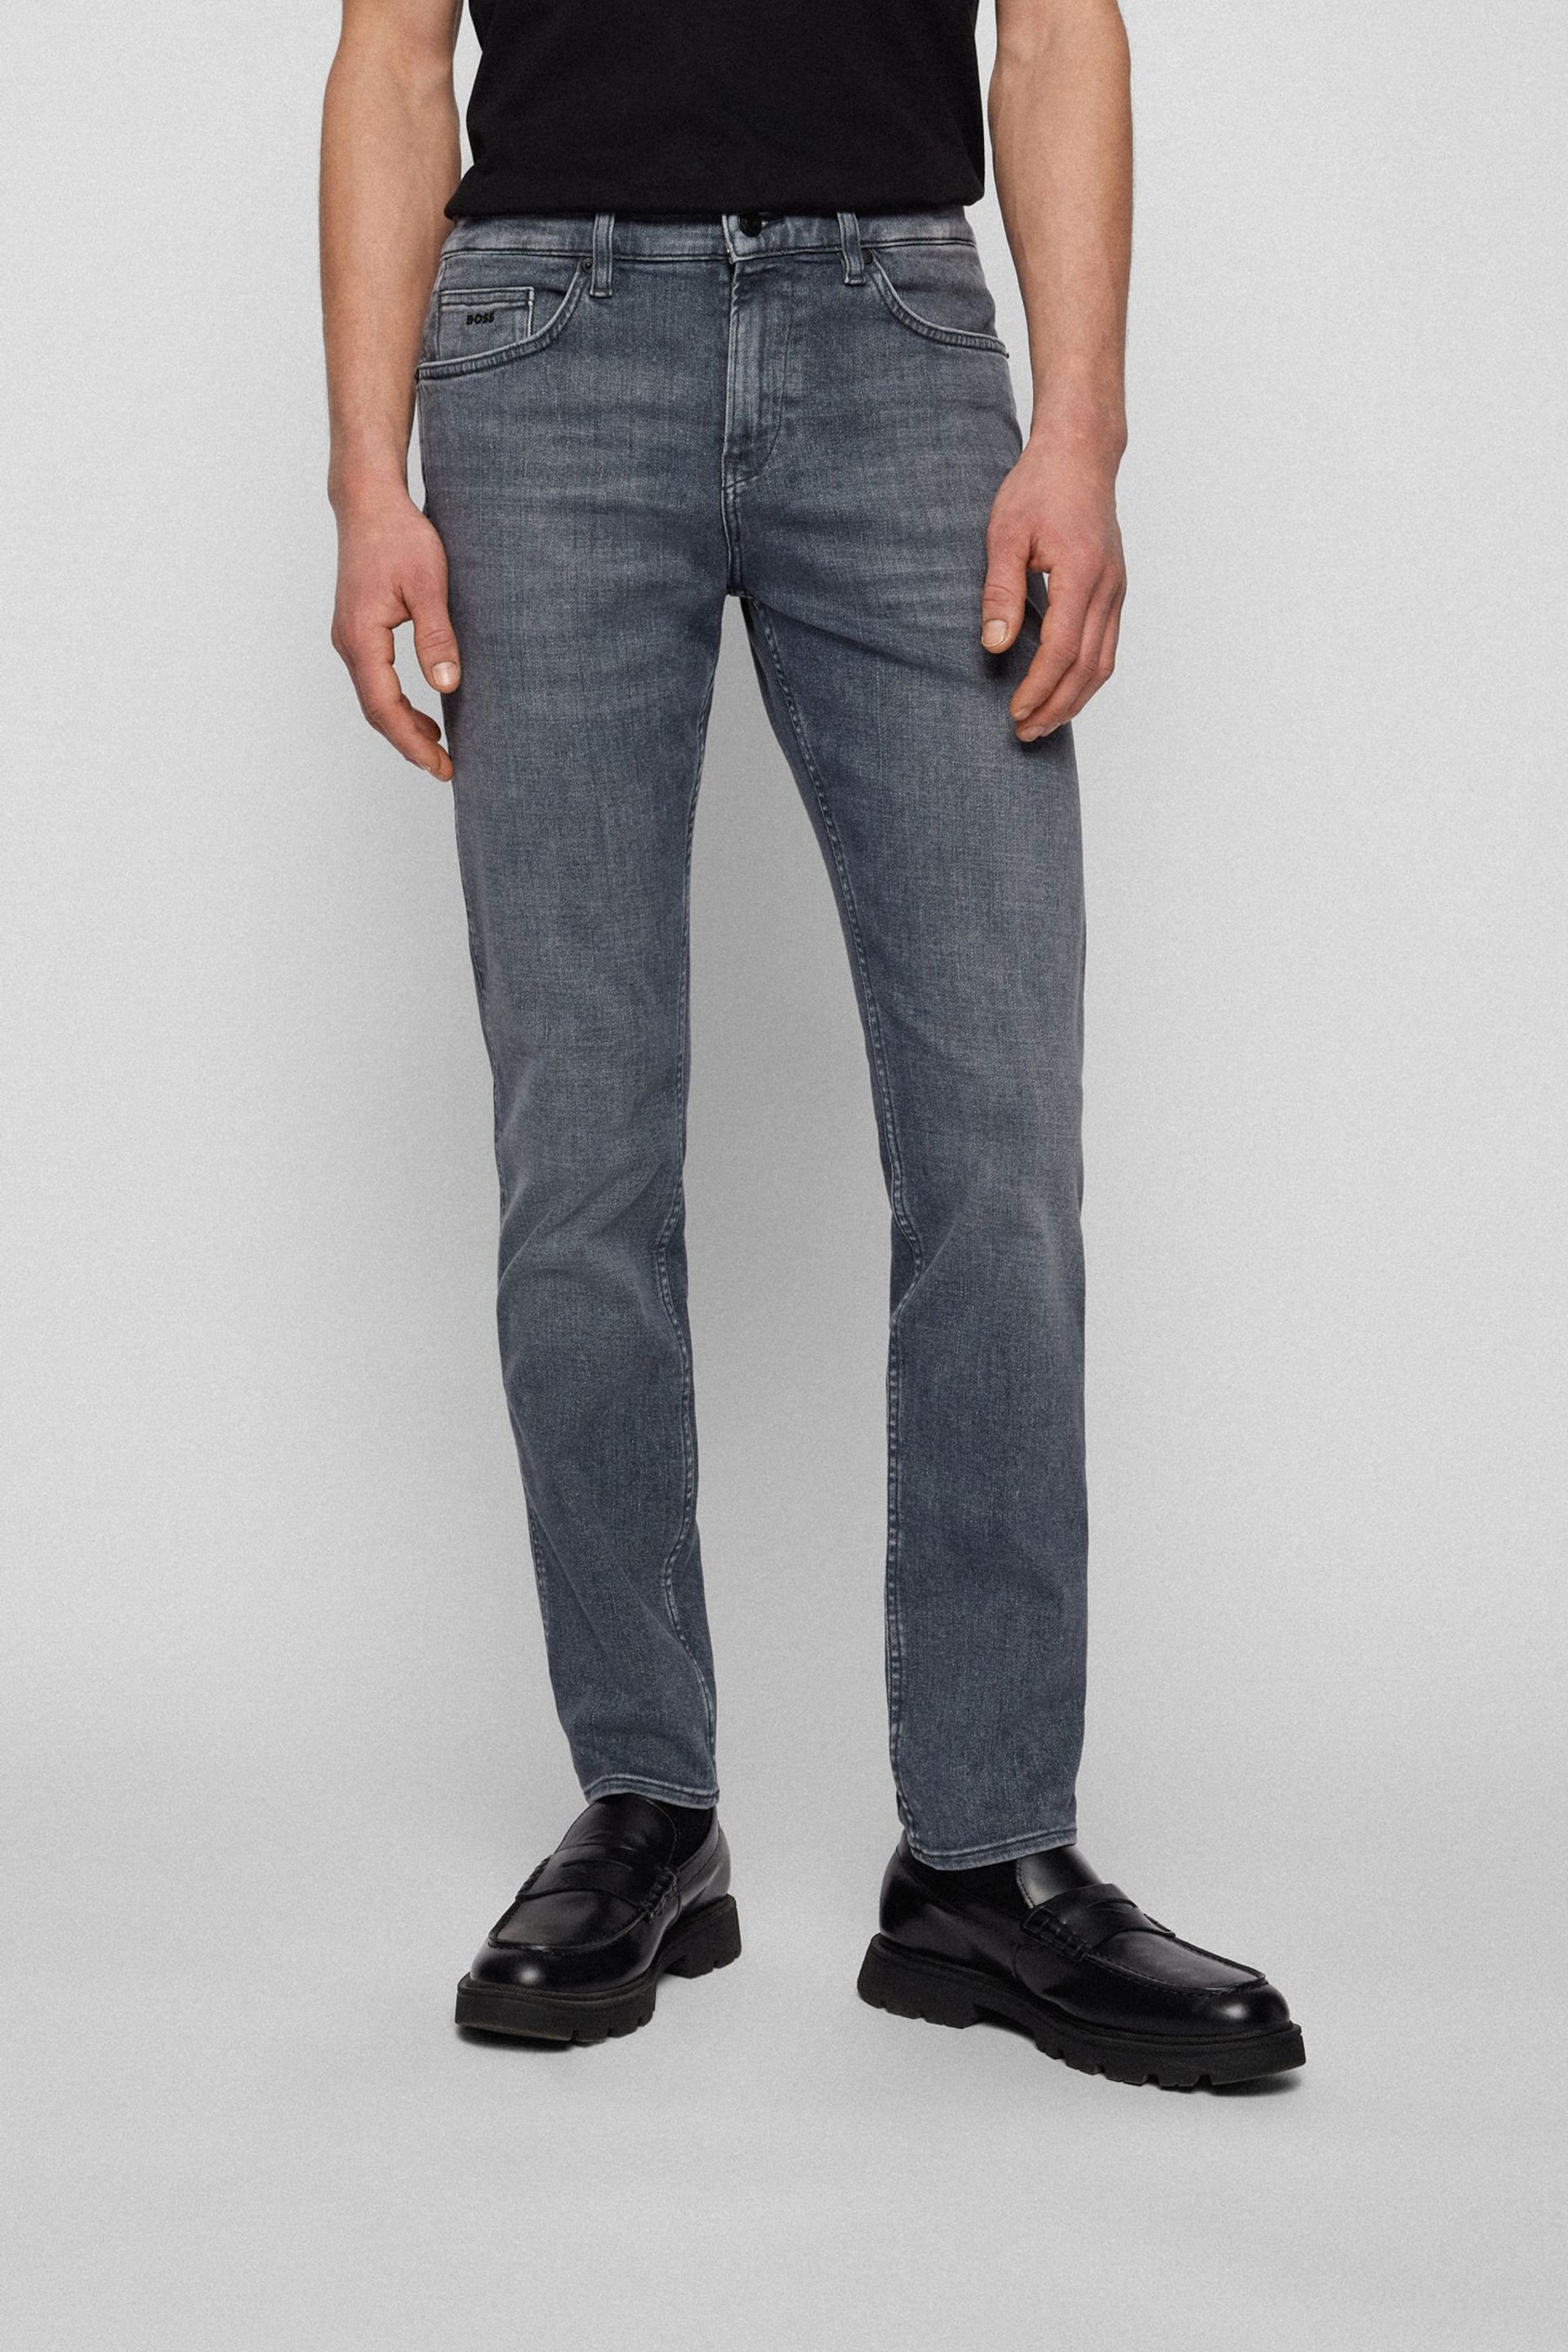 BOSS Light Grey Delaware Slim Fit Jeans - Image 1 of 5